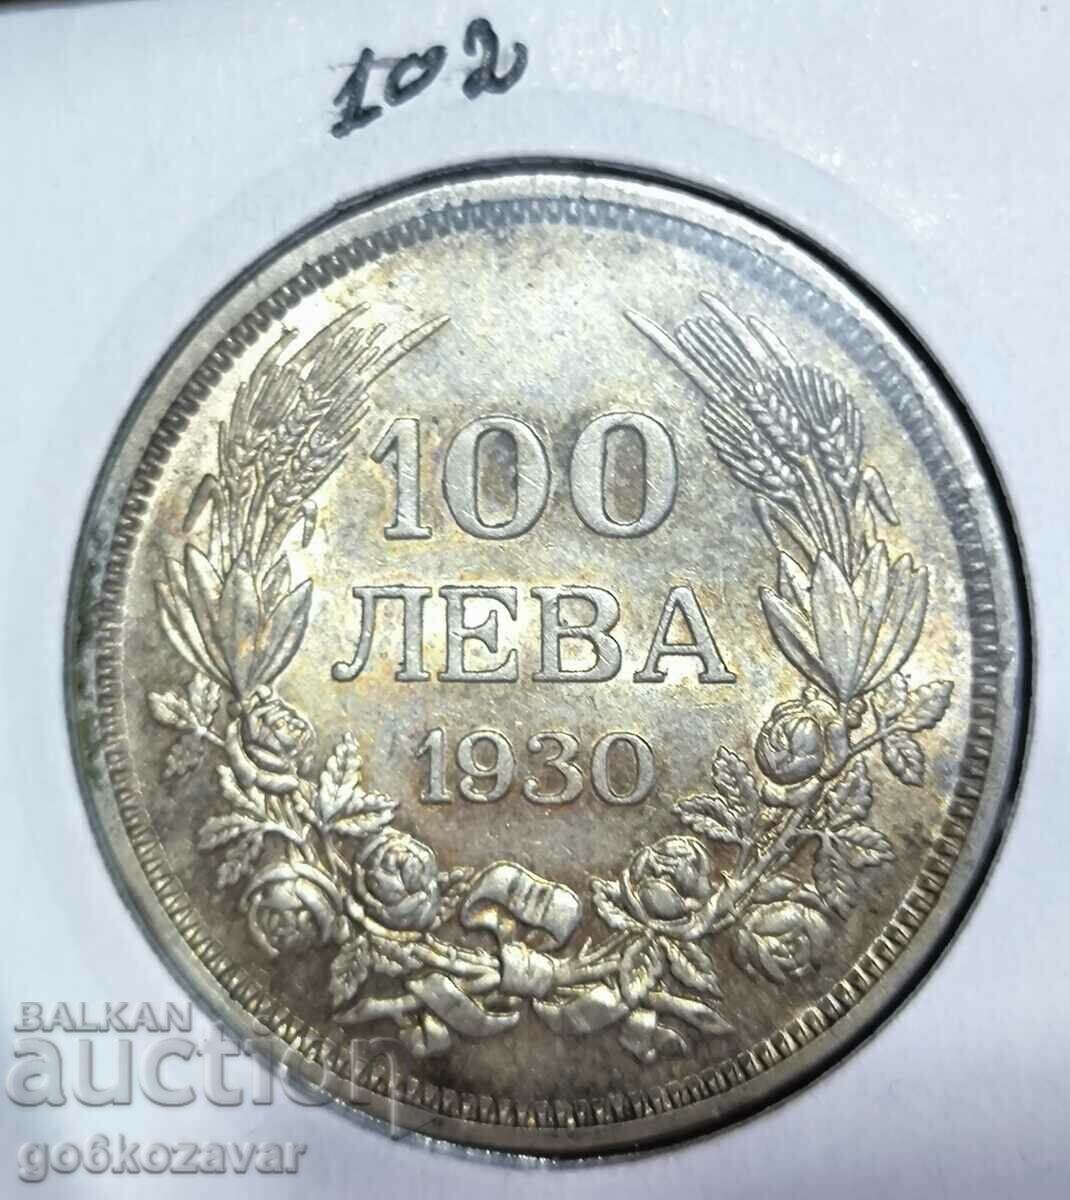 Bulgaria 100 BGN 1930 Silver, top beauty! Collection!